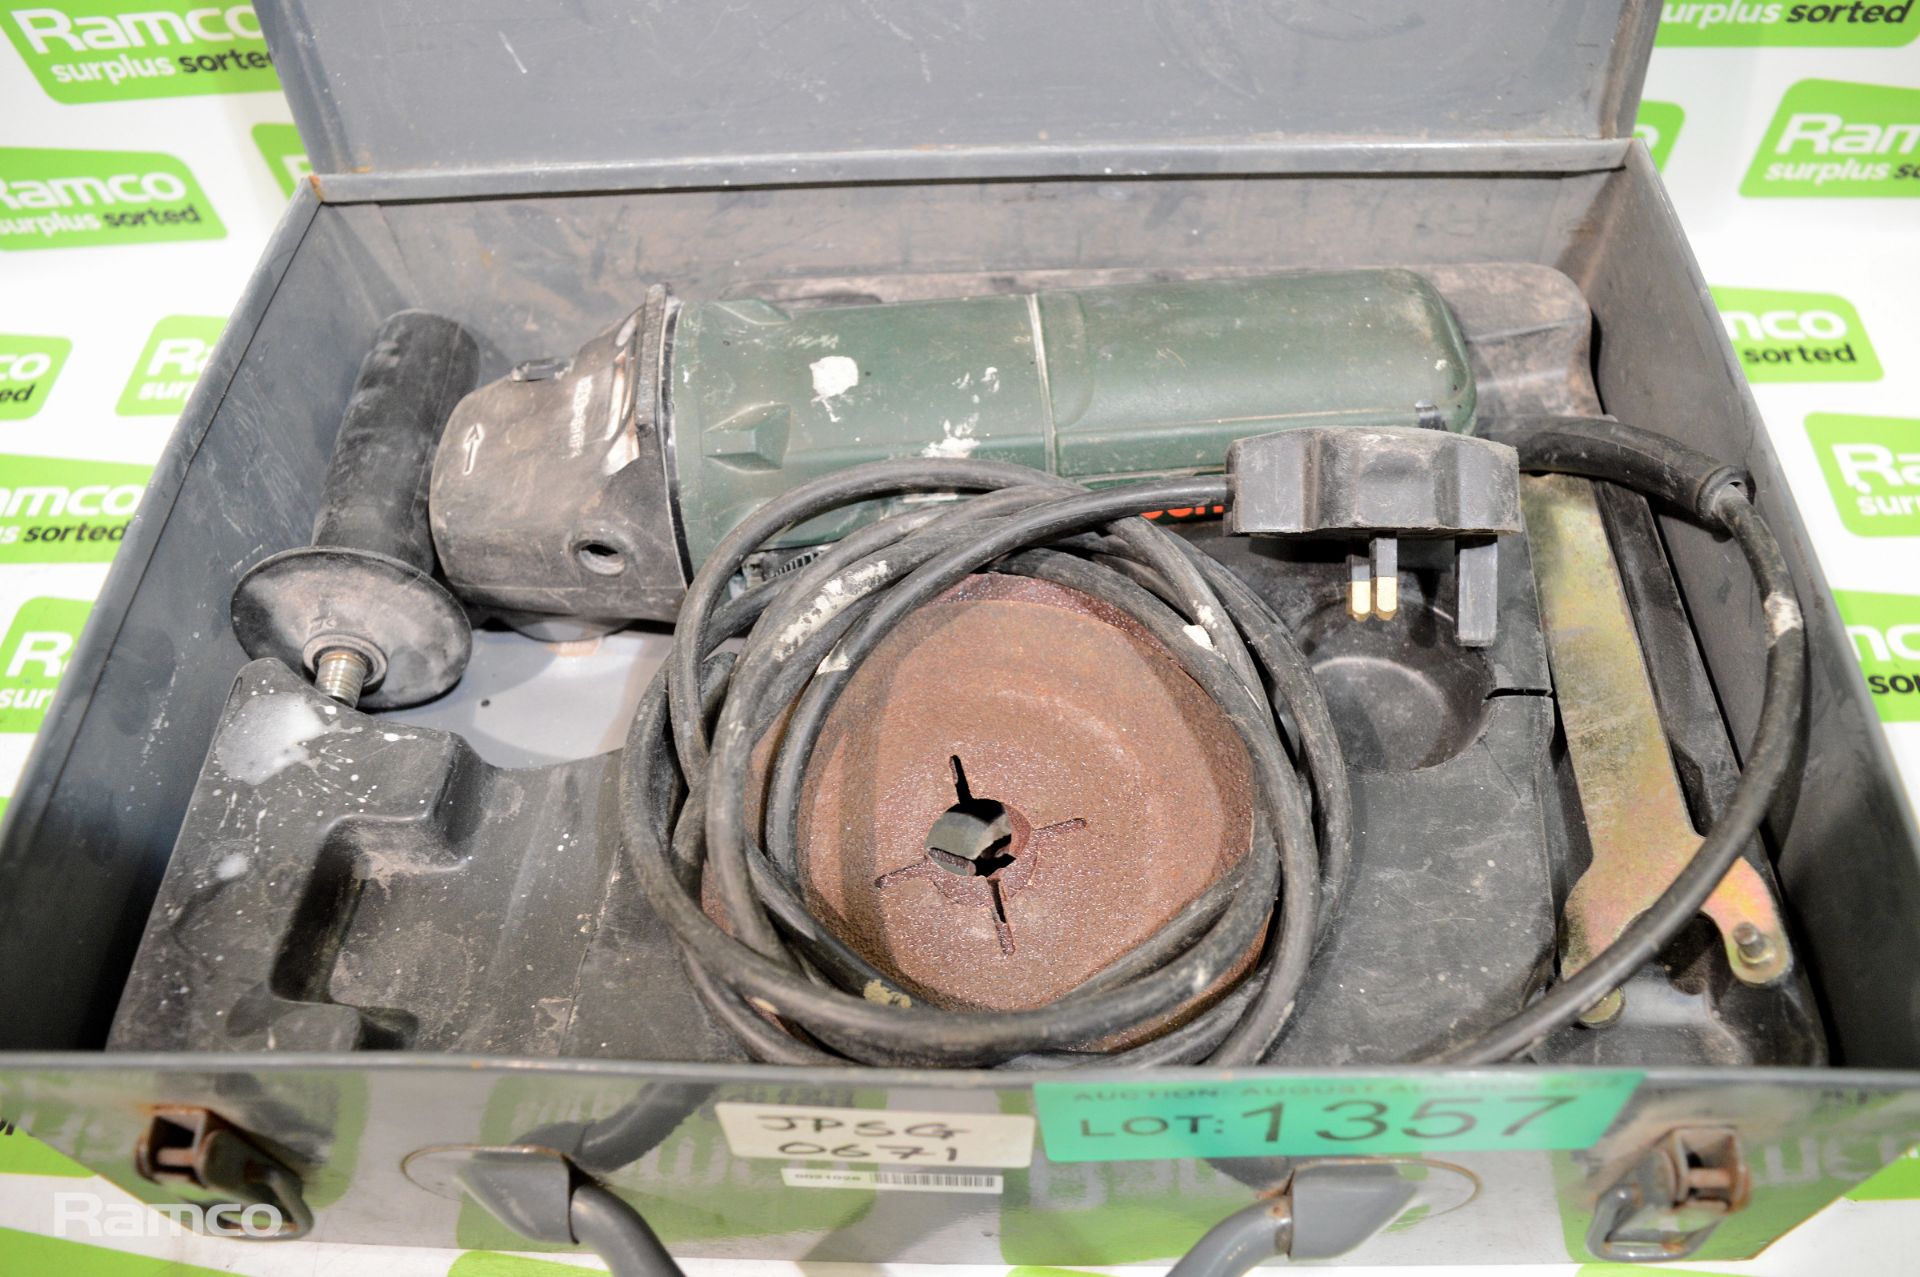 Bosch PWS 7-115 electric angle grinder 230v & case - Image 2 of 4